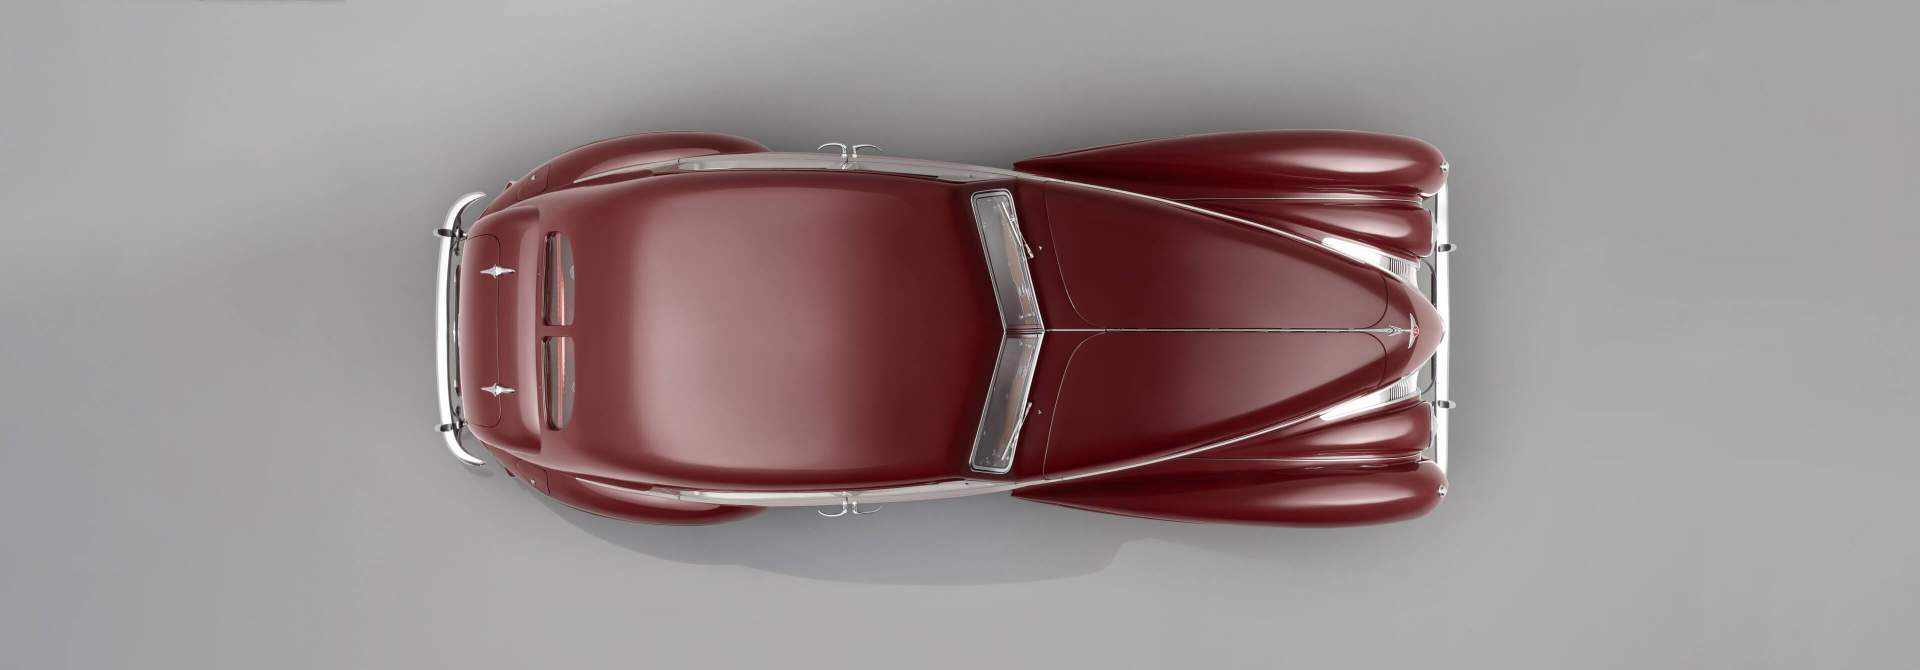 Bentley-Corniche-overhead-view-1920x670.jpg